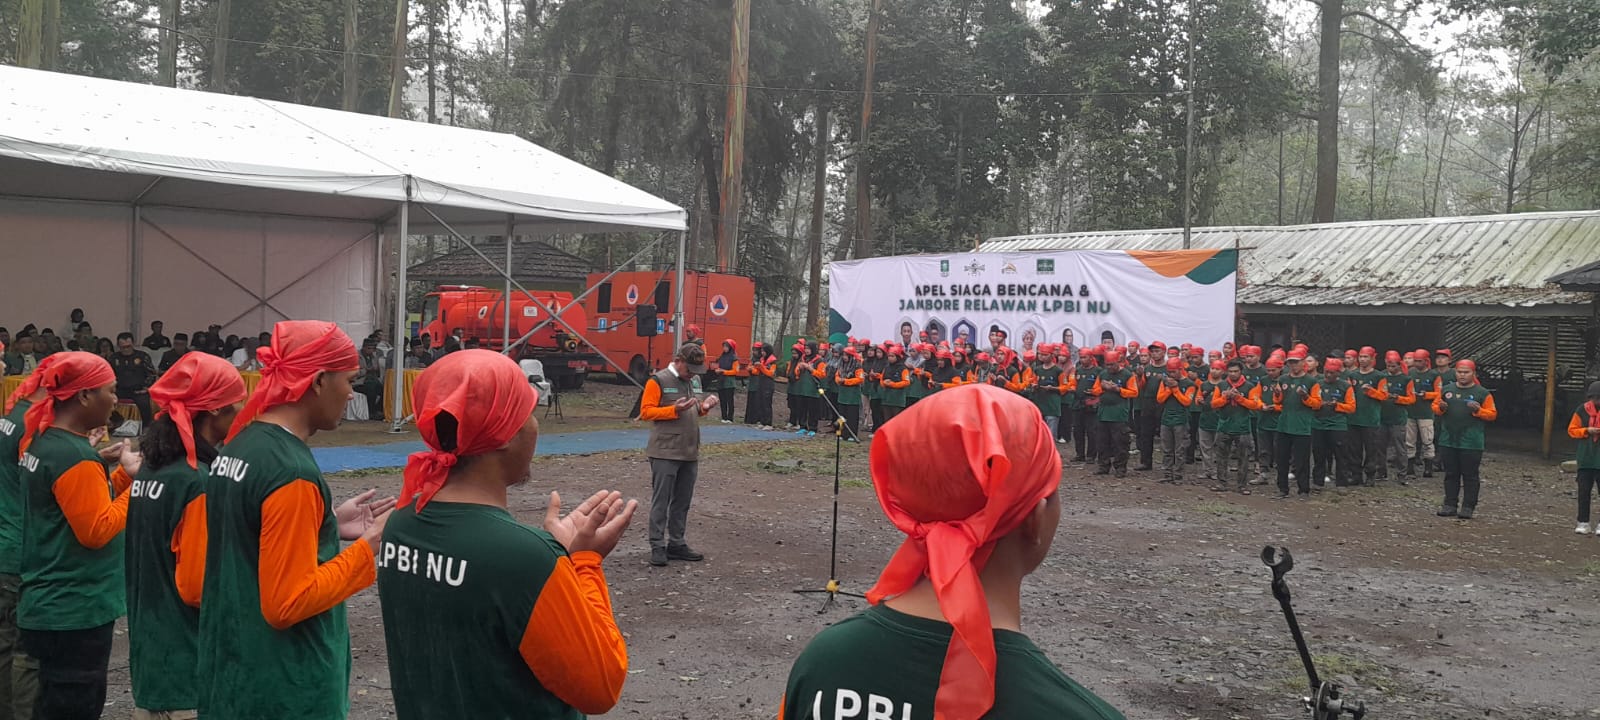 Diikuti Ratusan Peserta, Jambore Relawan LPBI NU dan Harlah LPBI ke-14 Digelar di Kertasari Bandung